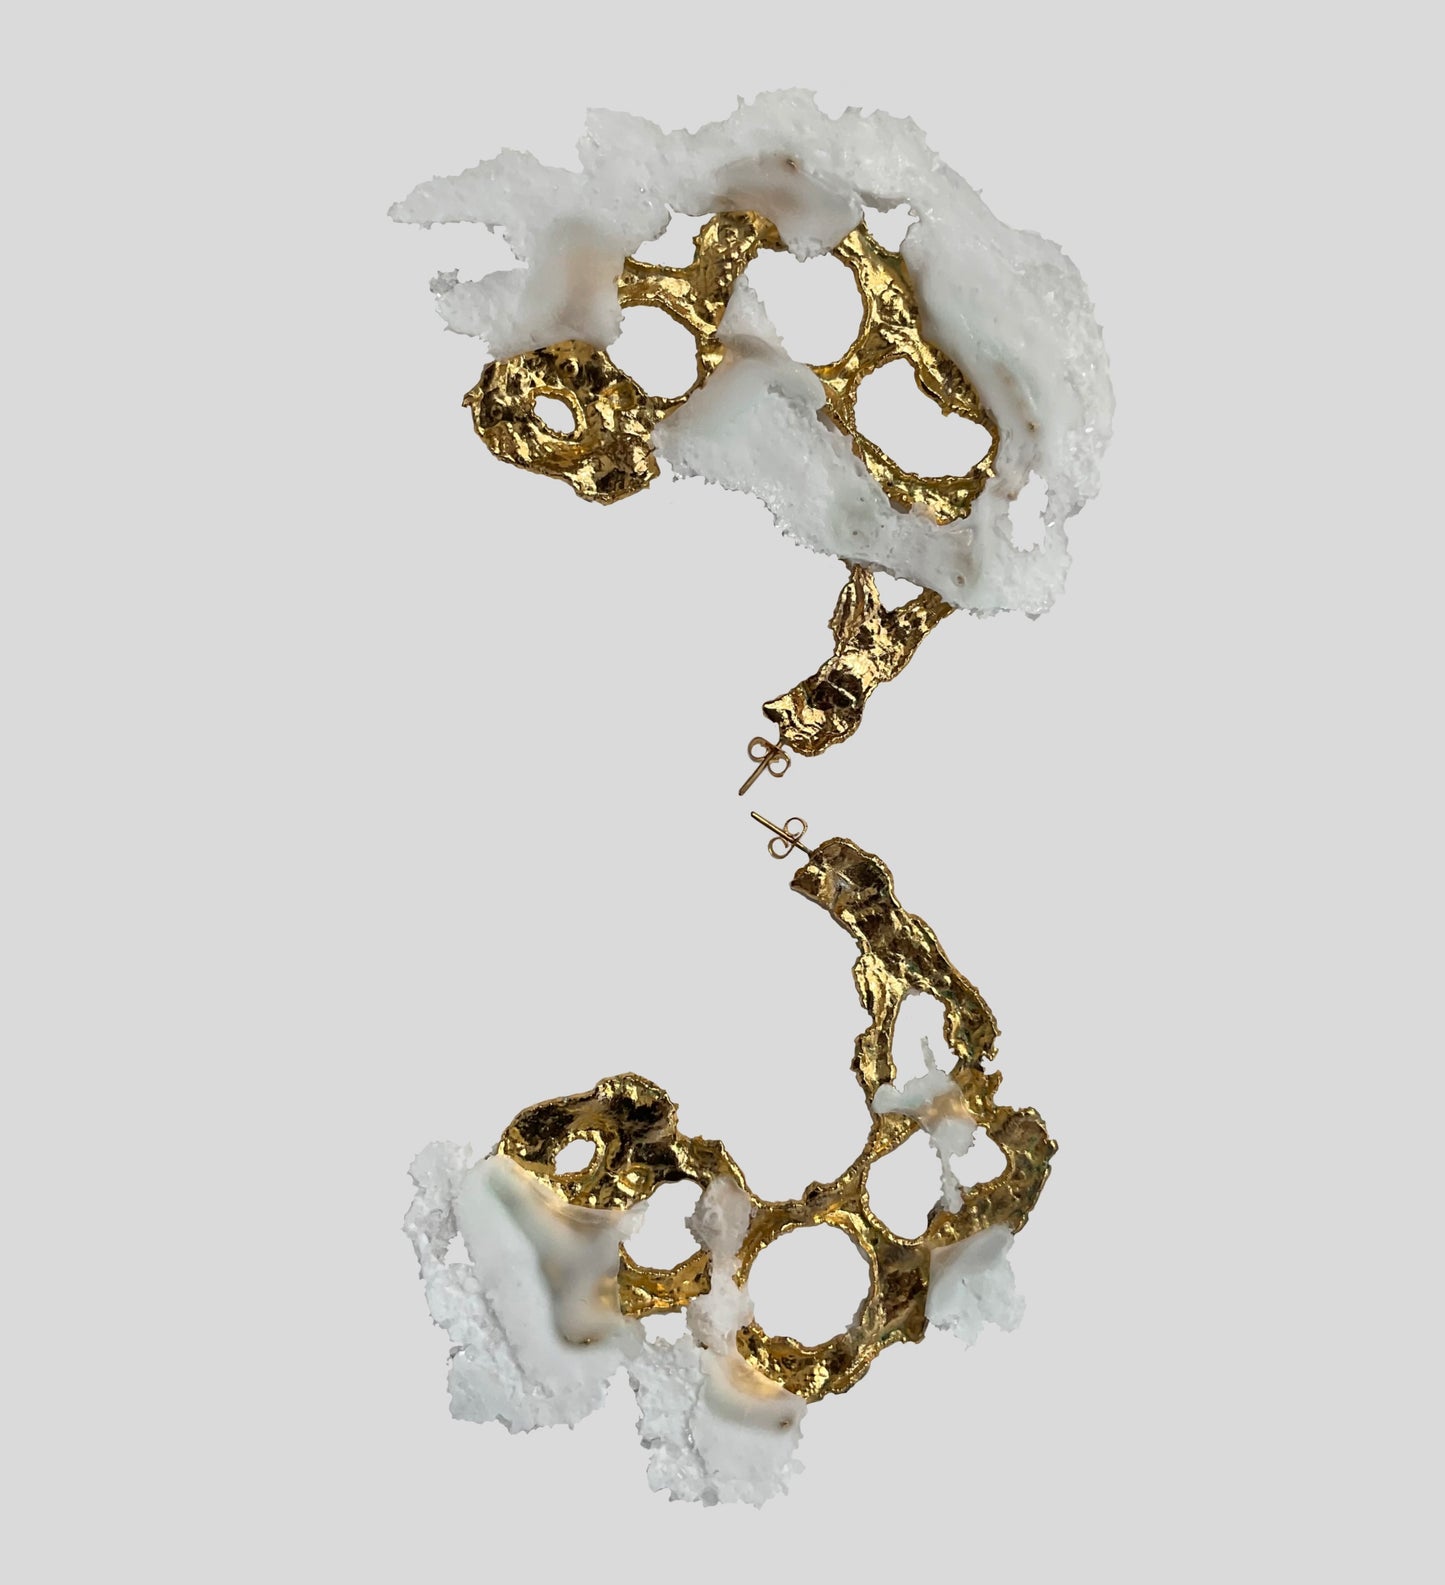 SALT earrings in gold tone with salty art